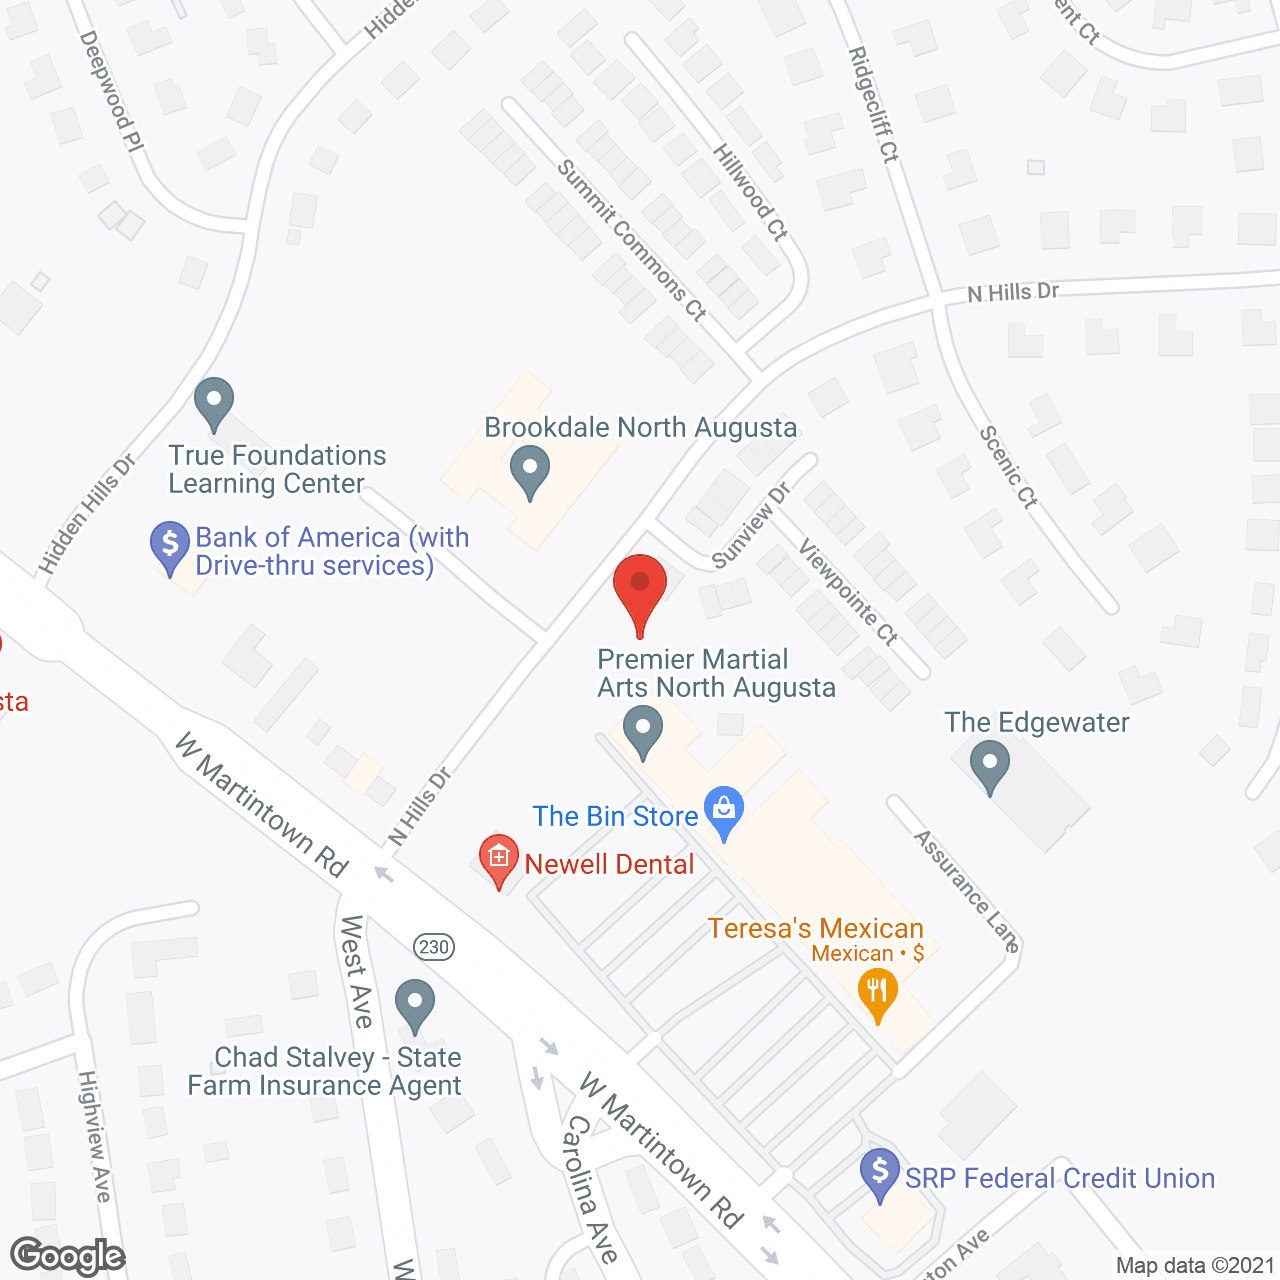 Brookdale North Augusta in google map